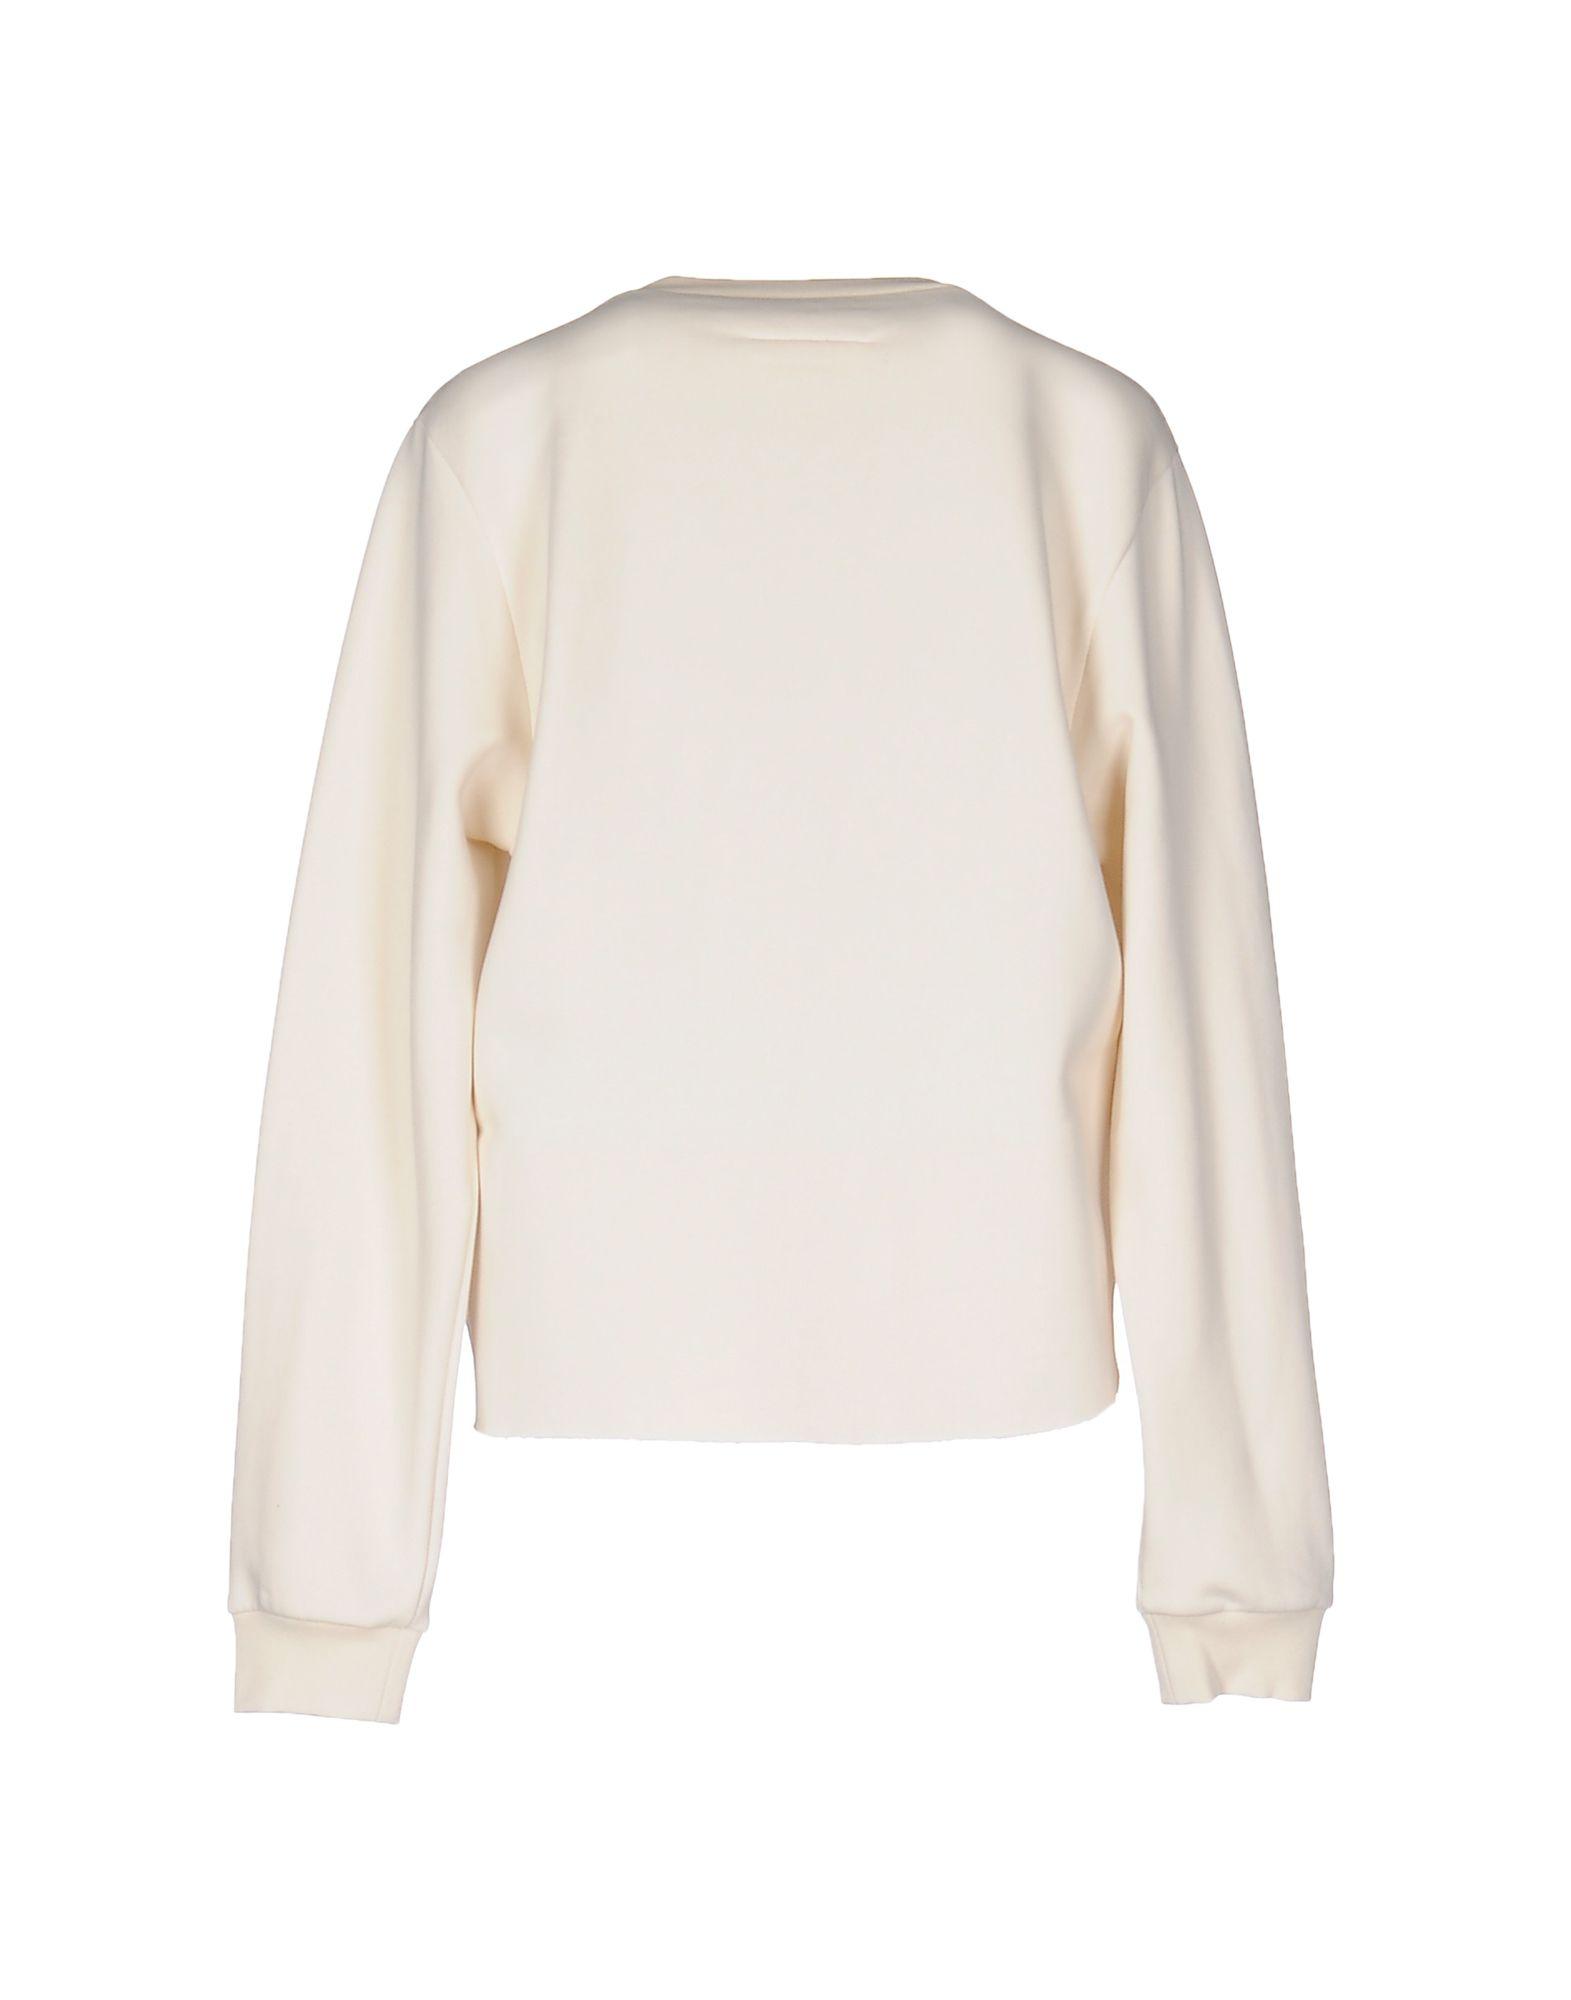 Mm6 by maison martin margiela Sweatshirt in White | Lyst